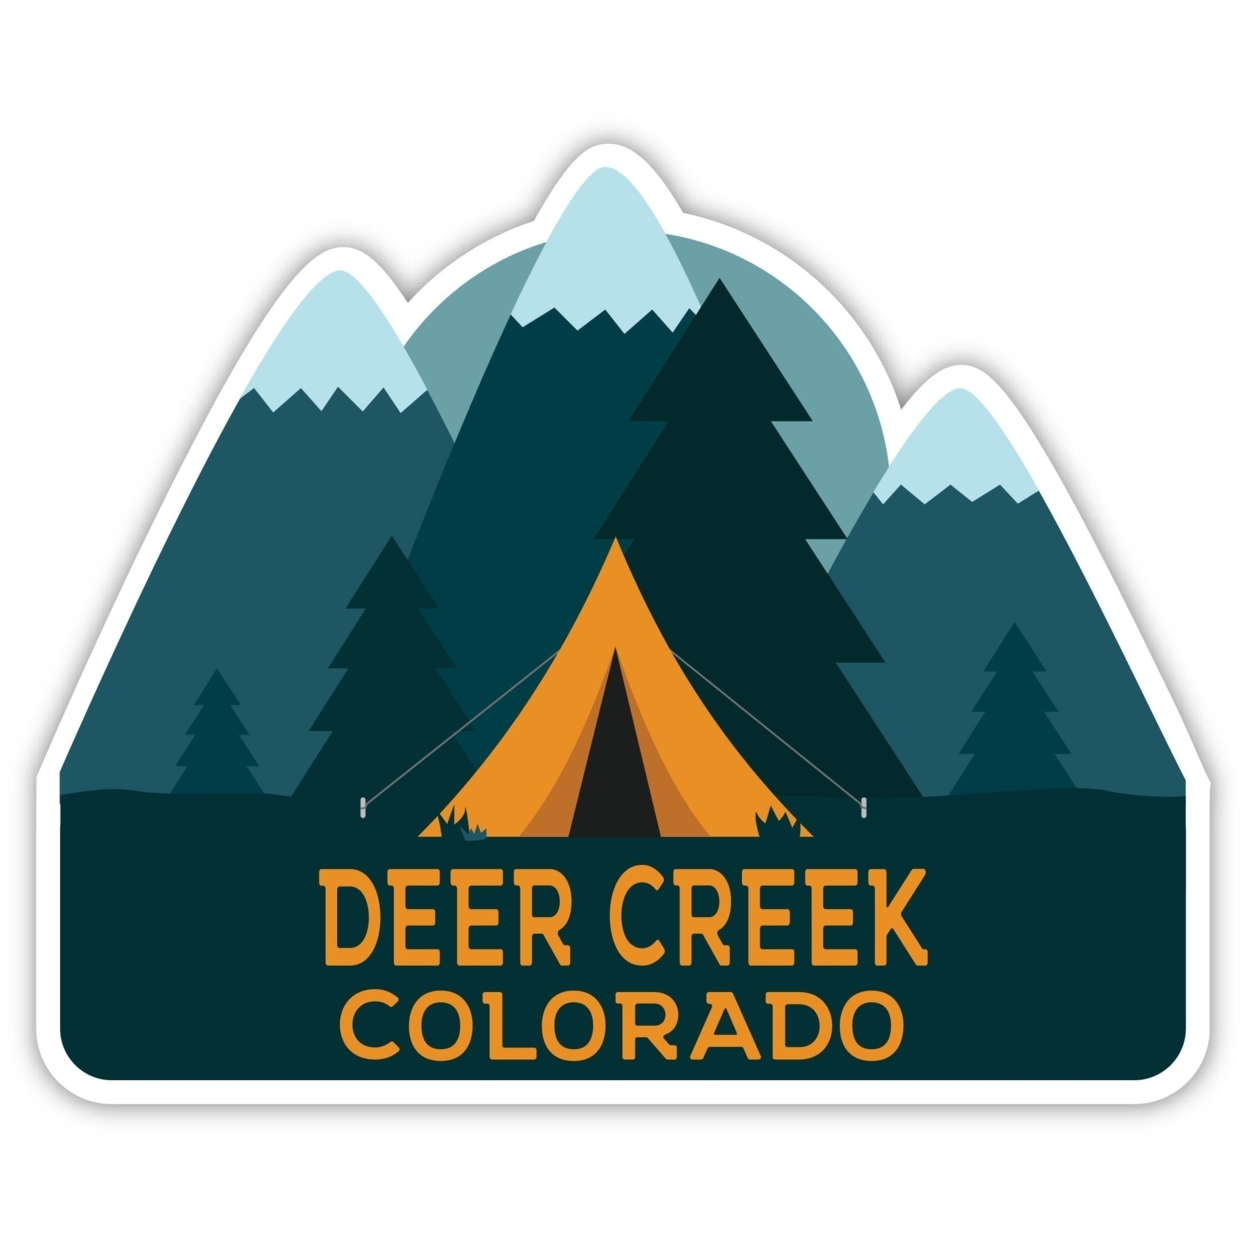 Deer Creek Colorado Souvenir Decorative Stickers (Choose Theme And Size) - 4-Pack, 2-Inch, Tent